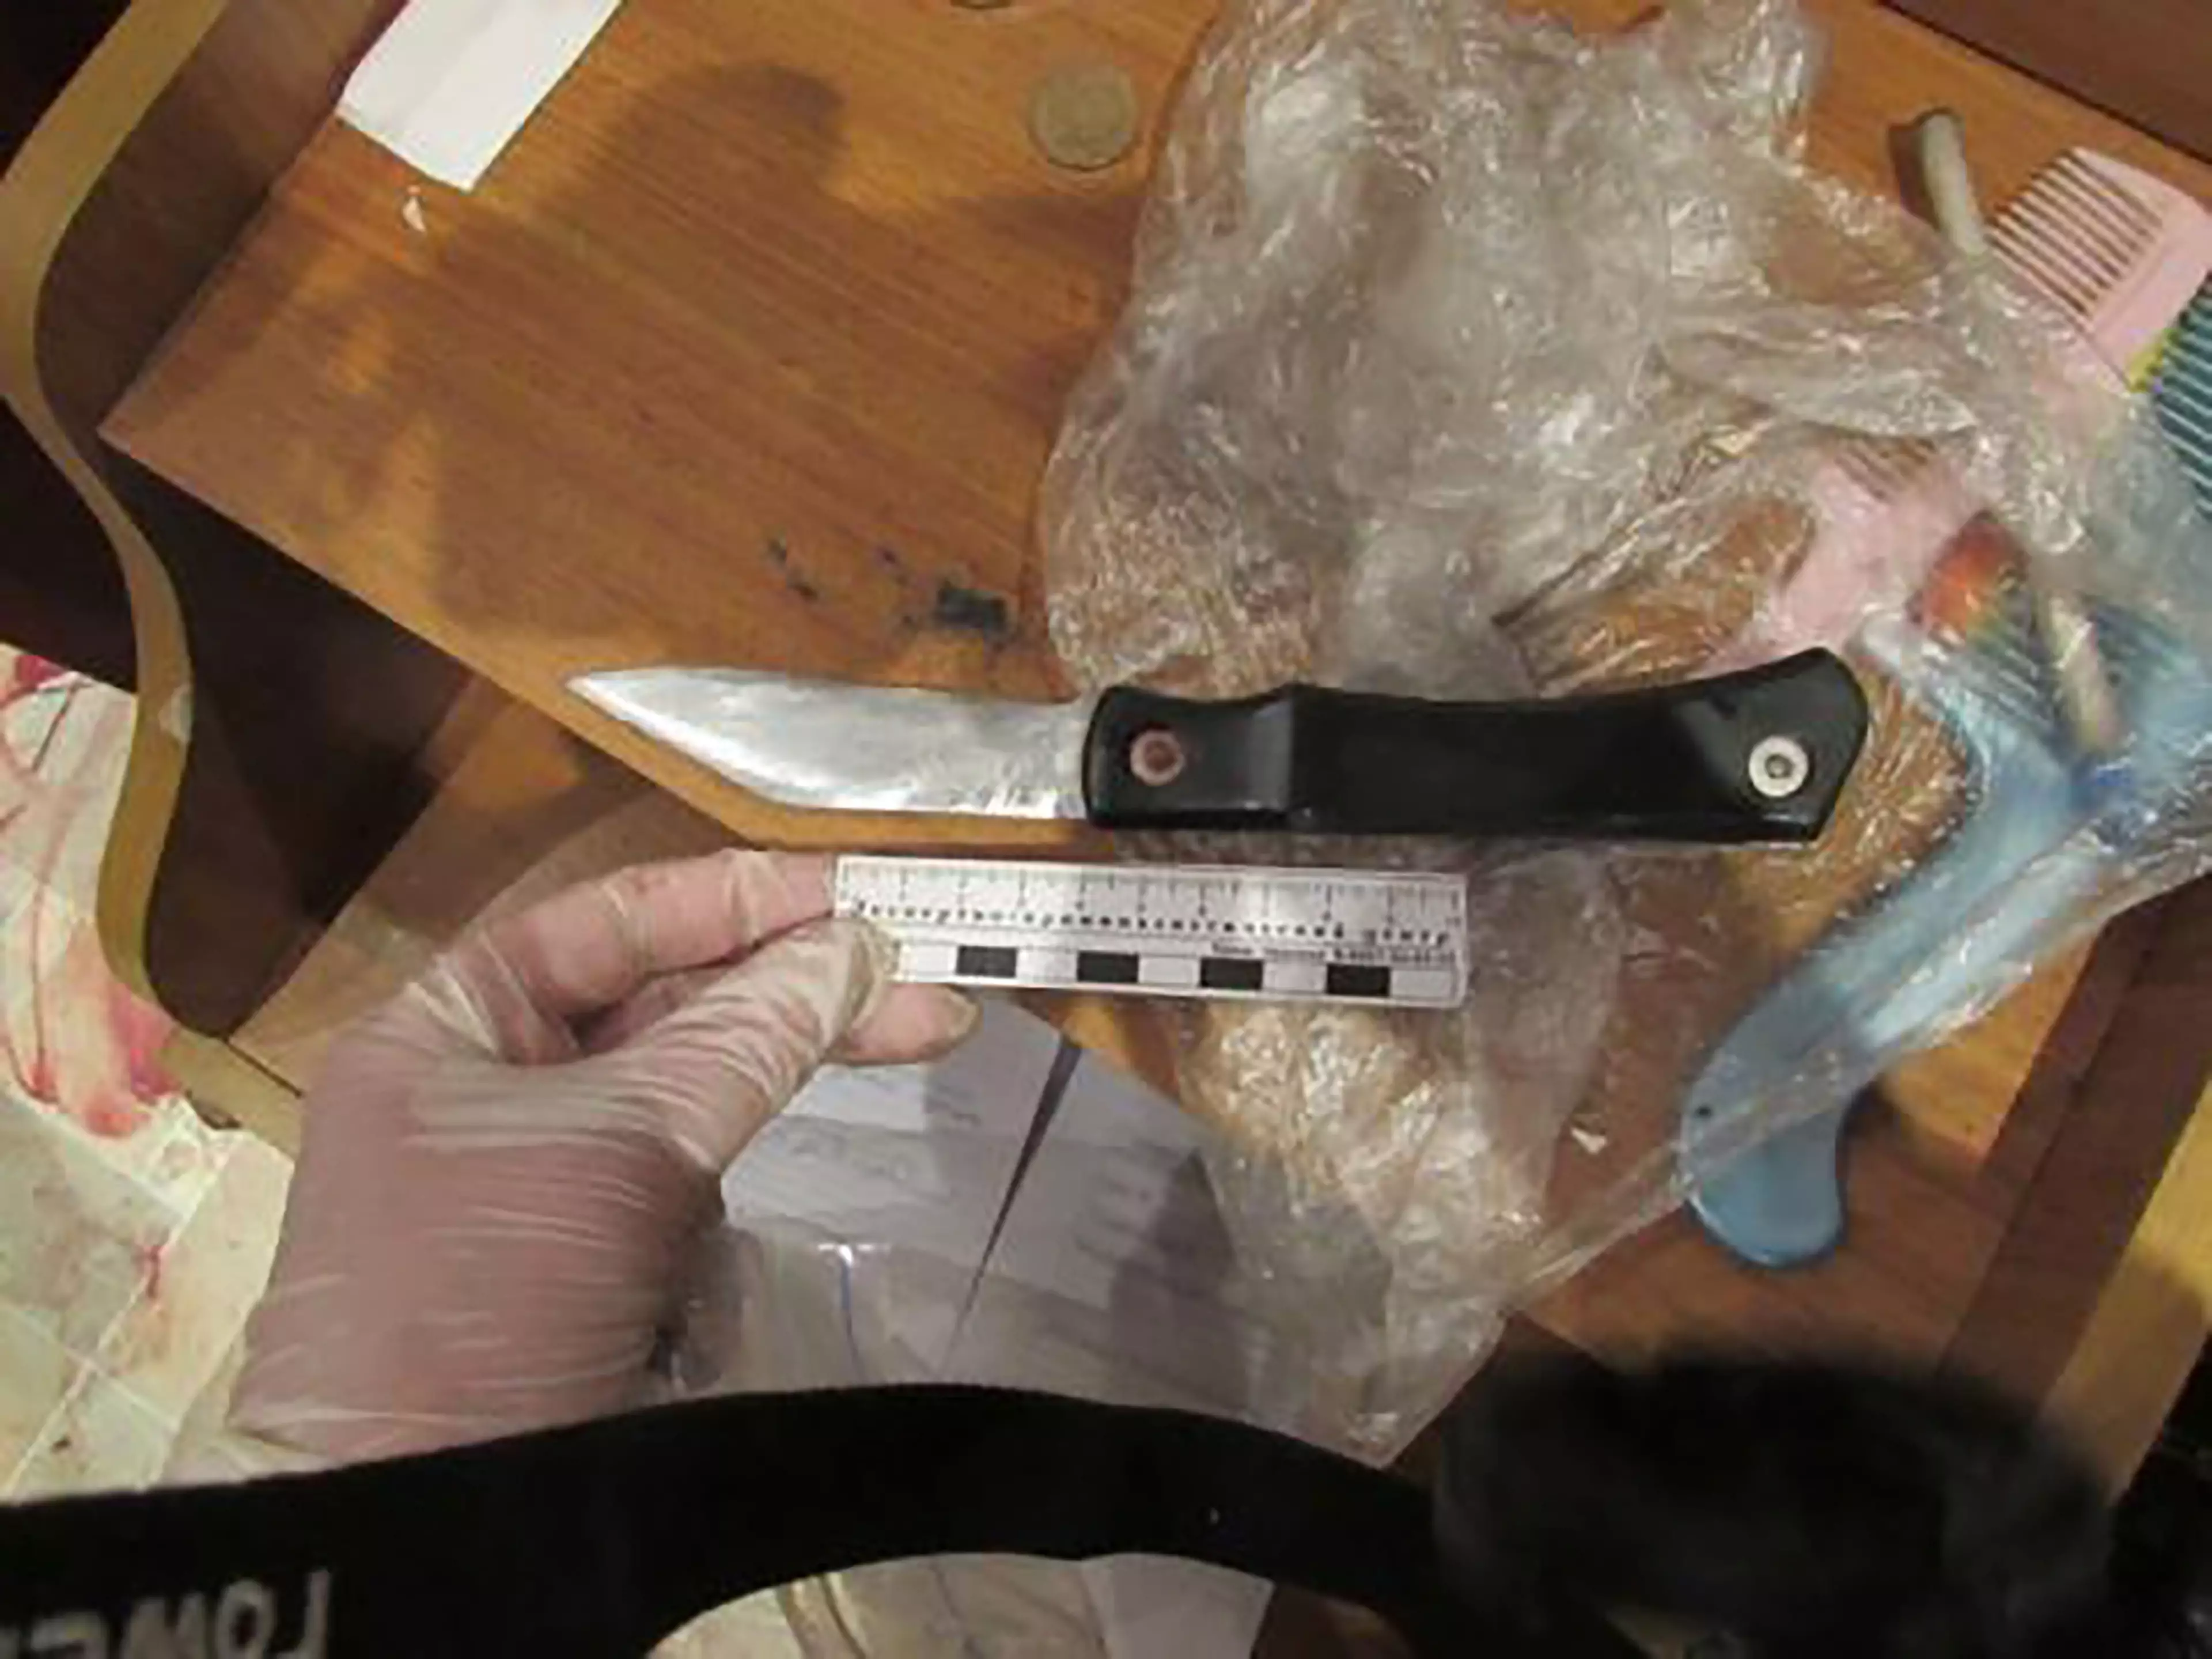 The kitchen knife allegedly used to kill Nikiforova.